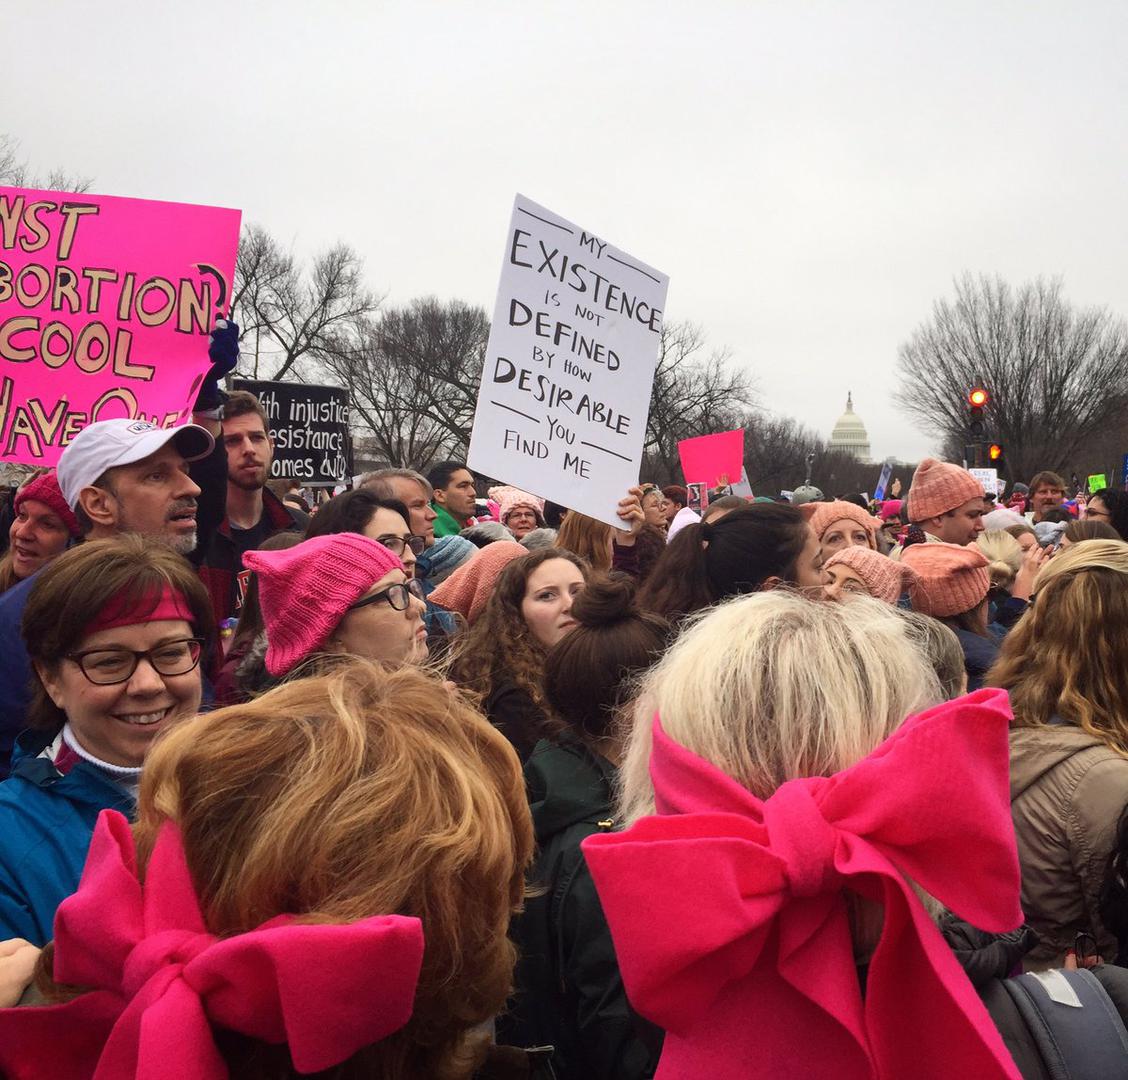 Scene on the national mall, Women's March, Washington DC 